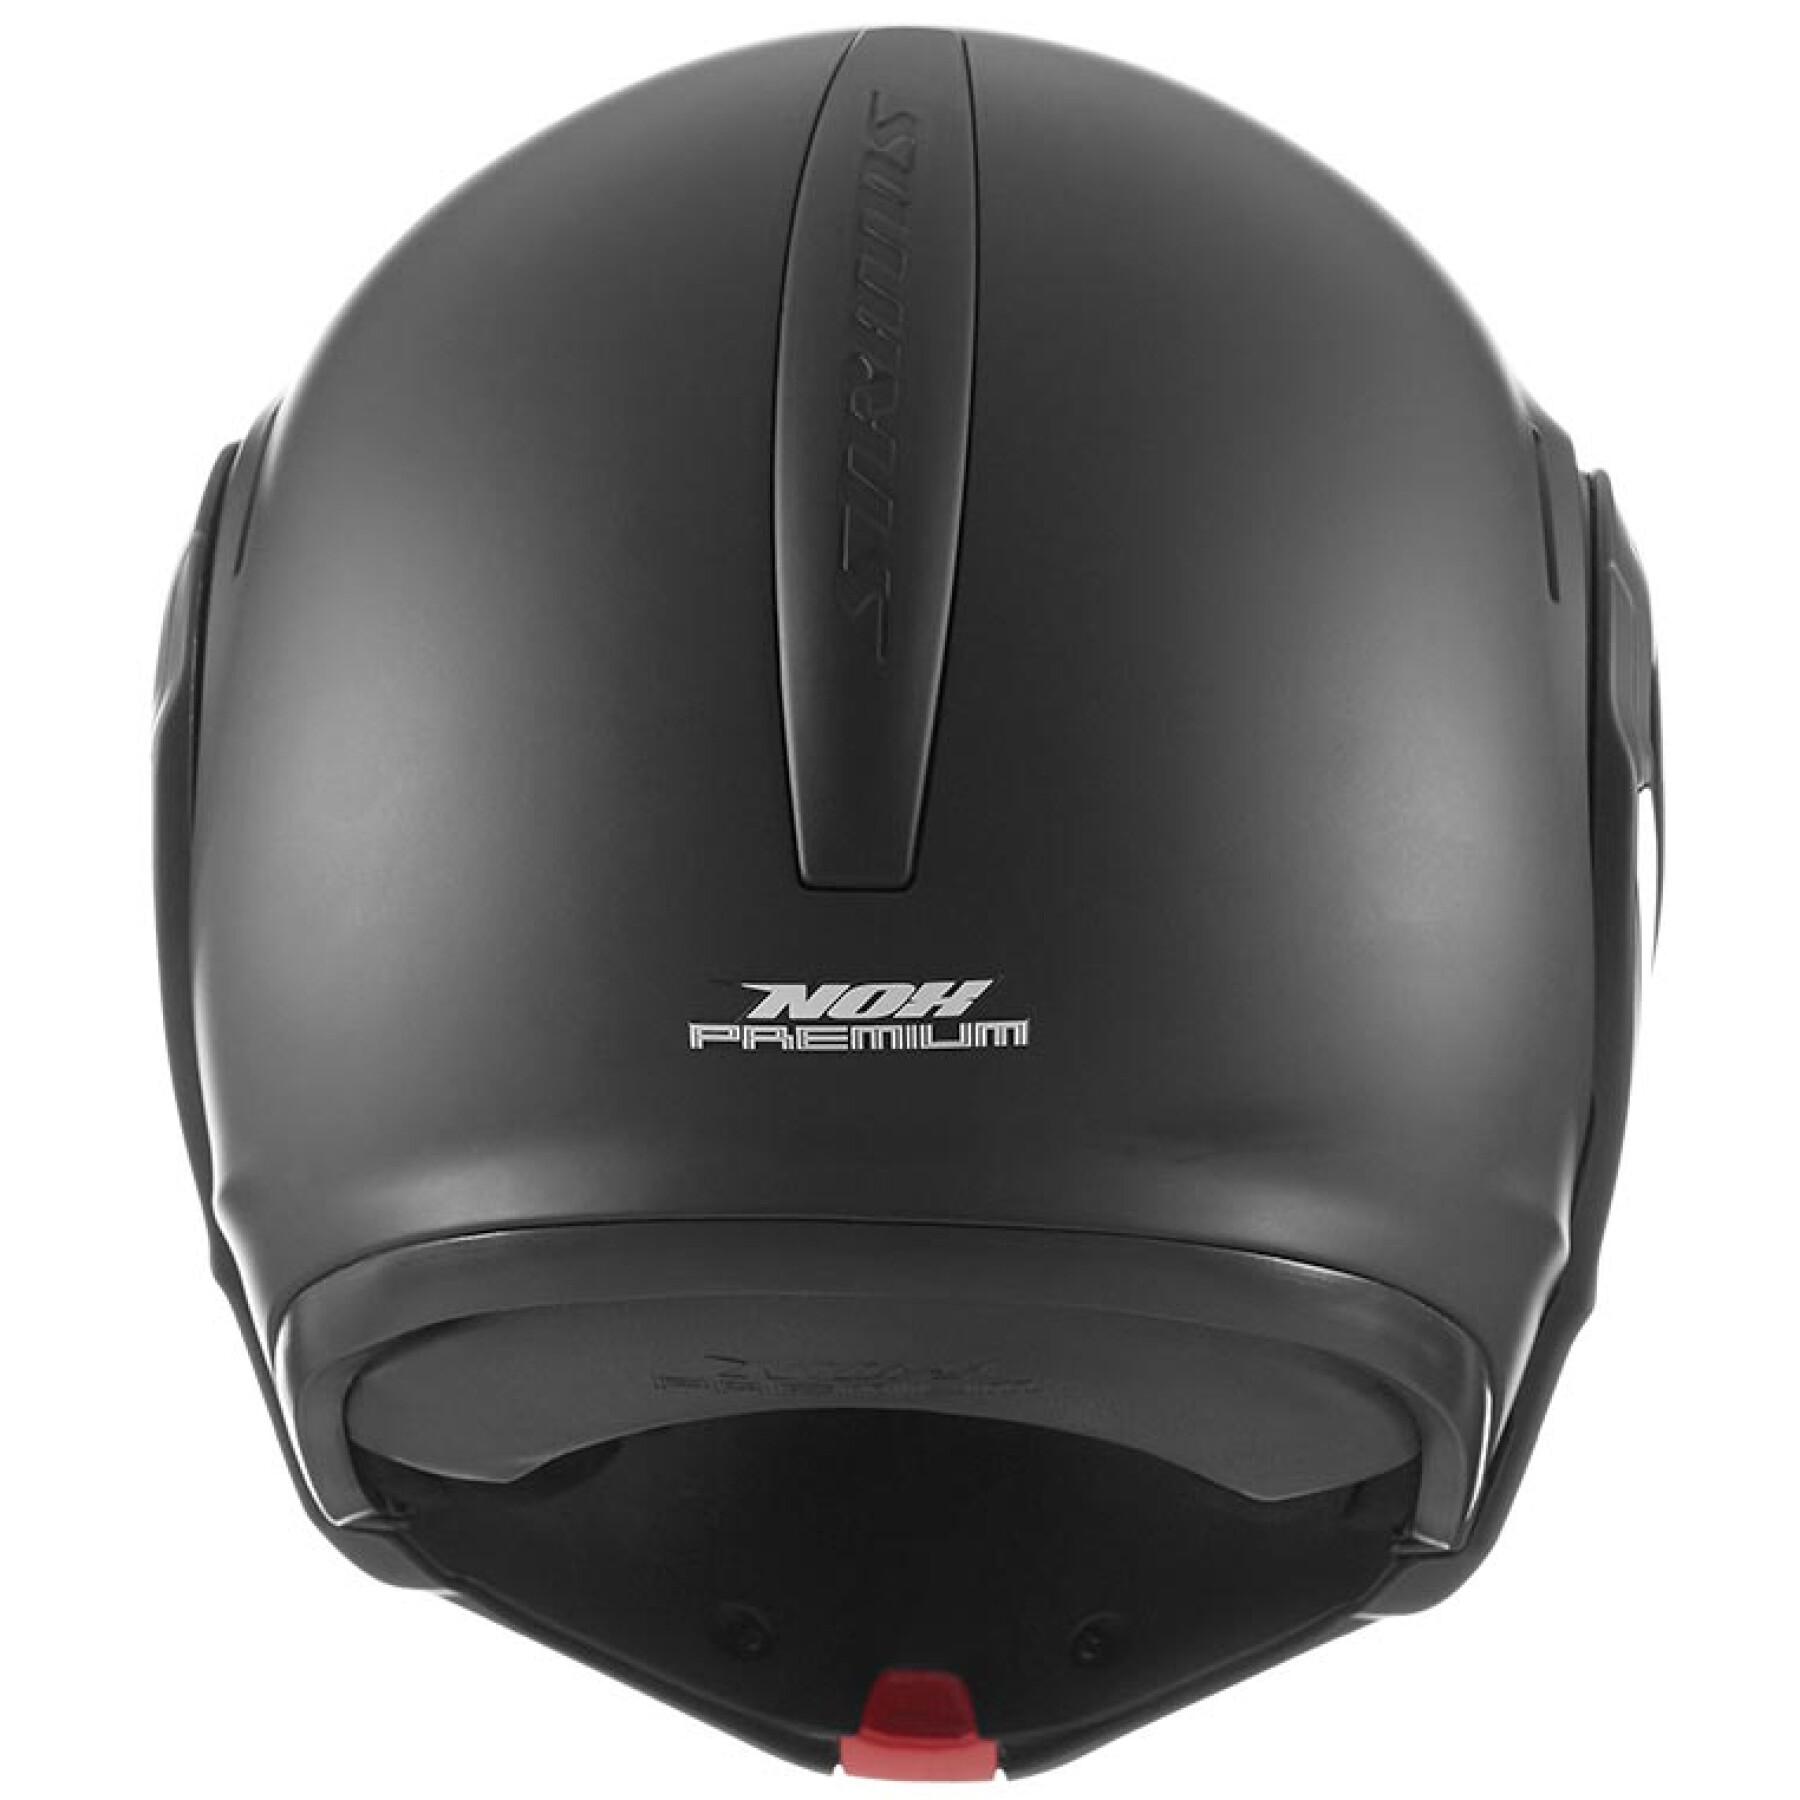 Modular helmet Nox Premium STRATOS